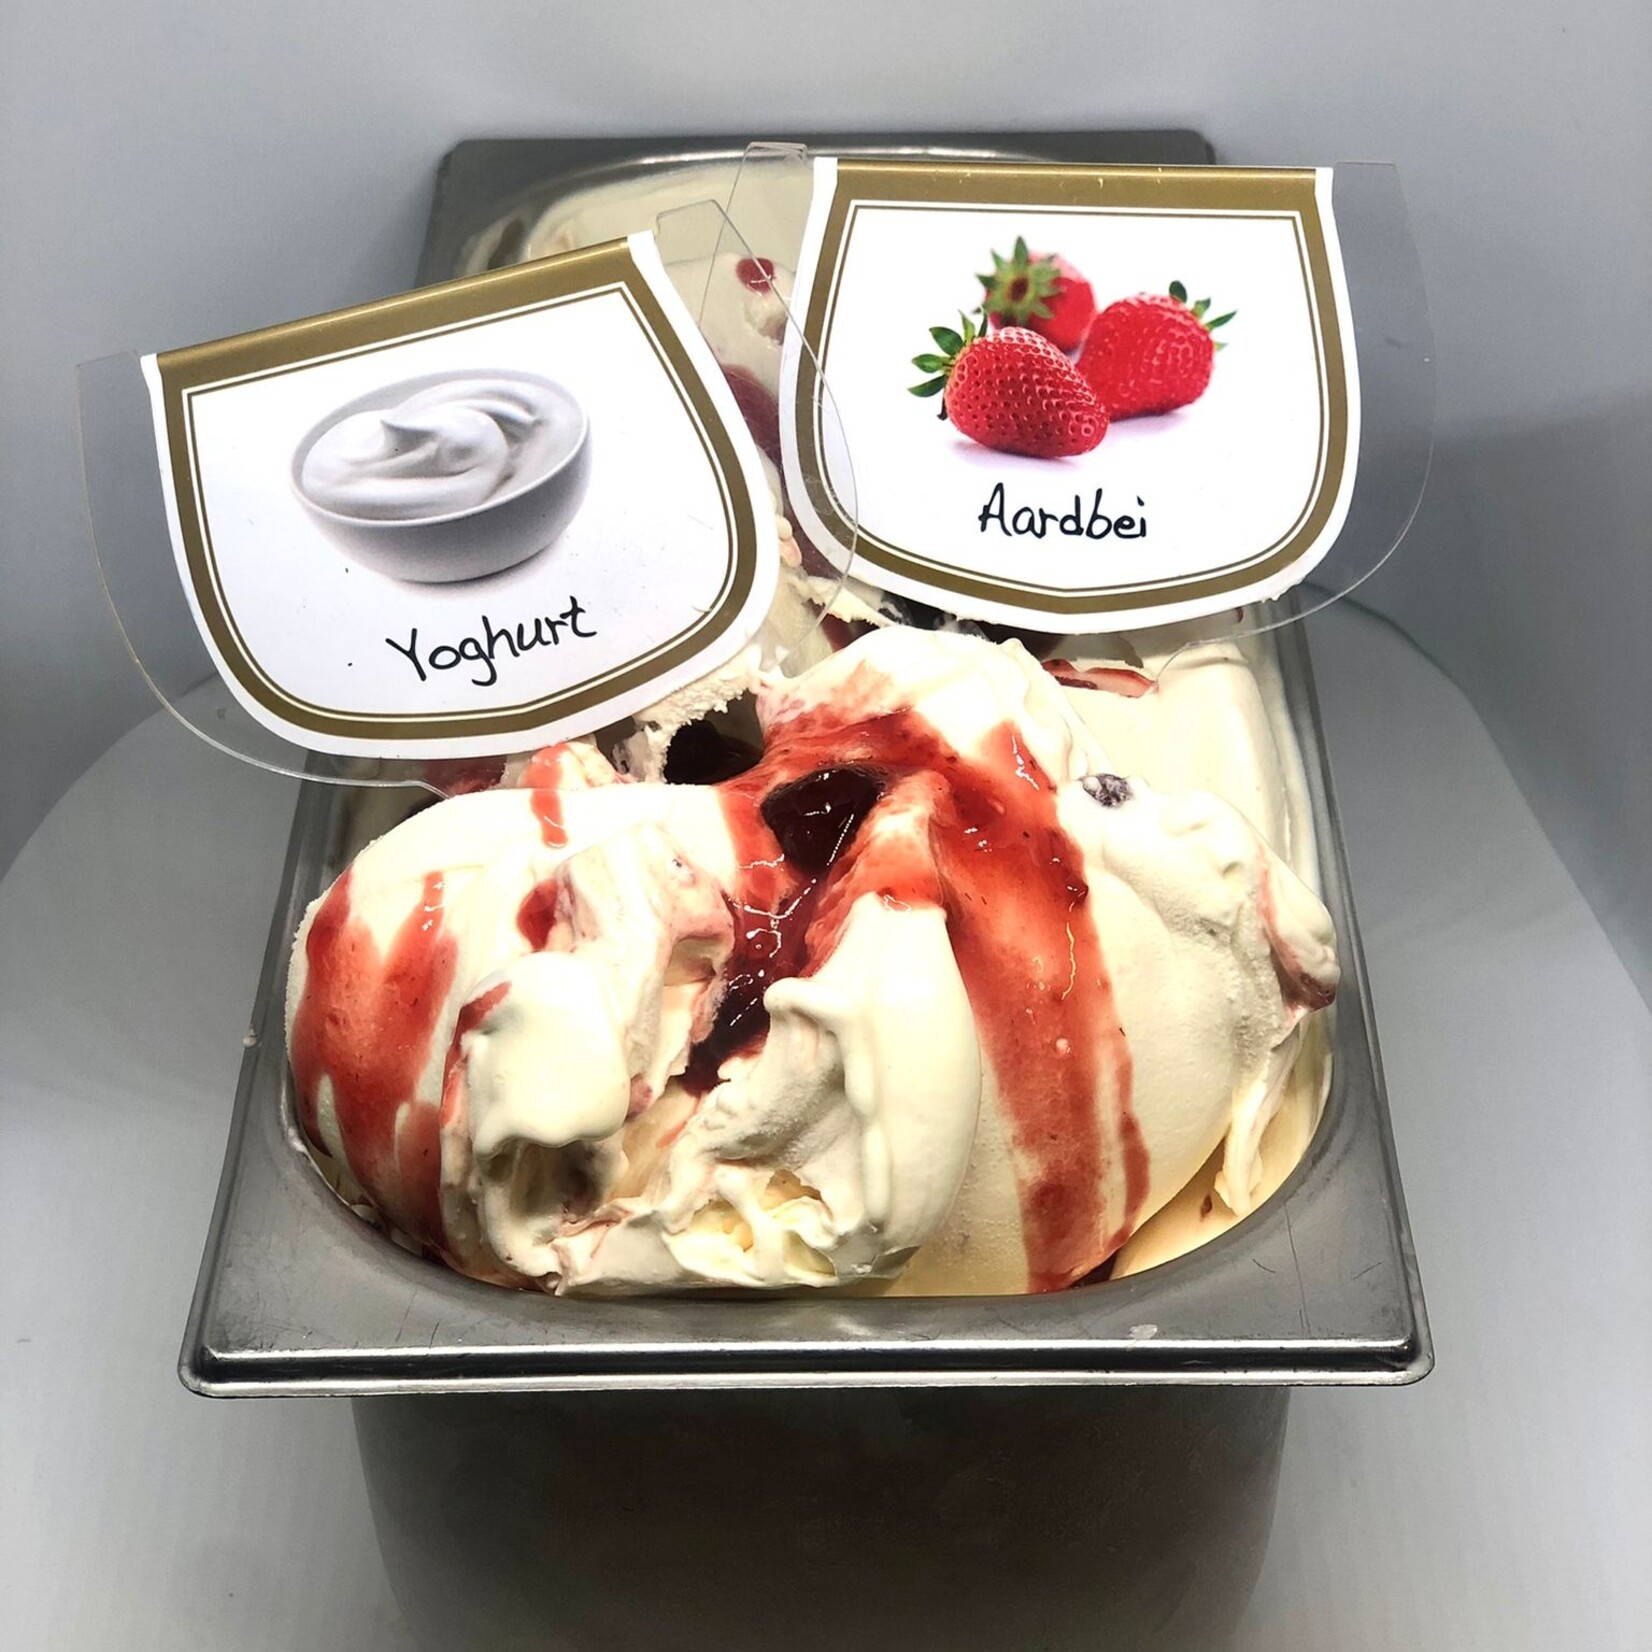 Yoghurt-Aardbei ijs